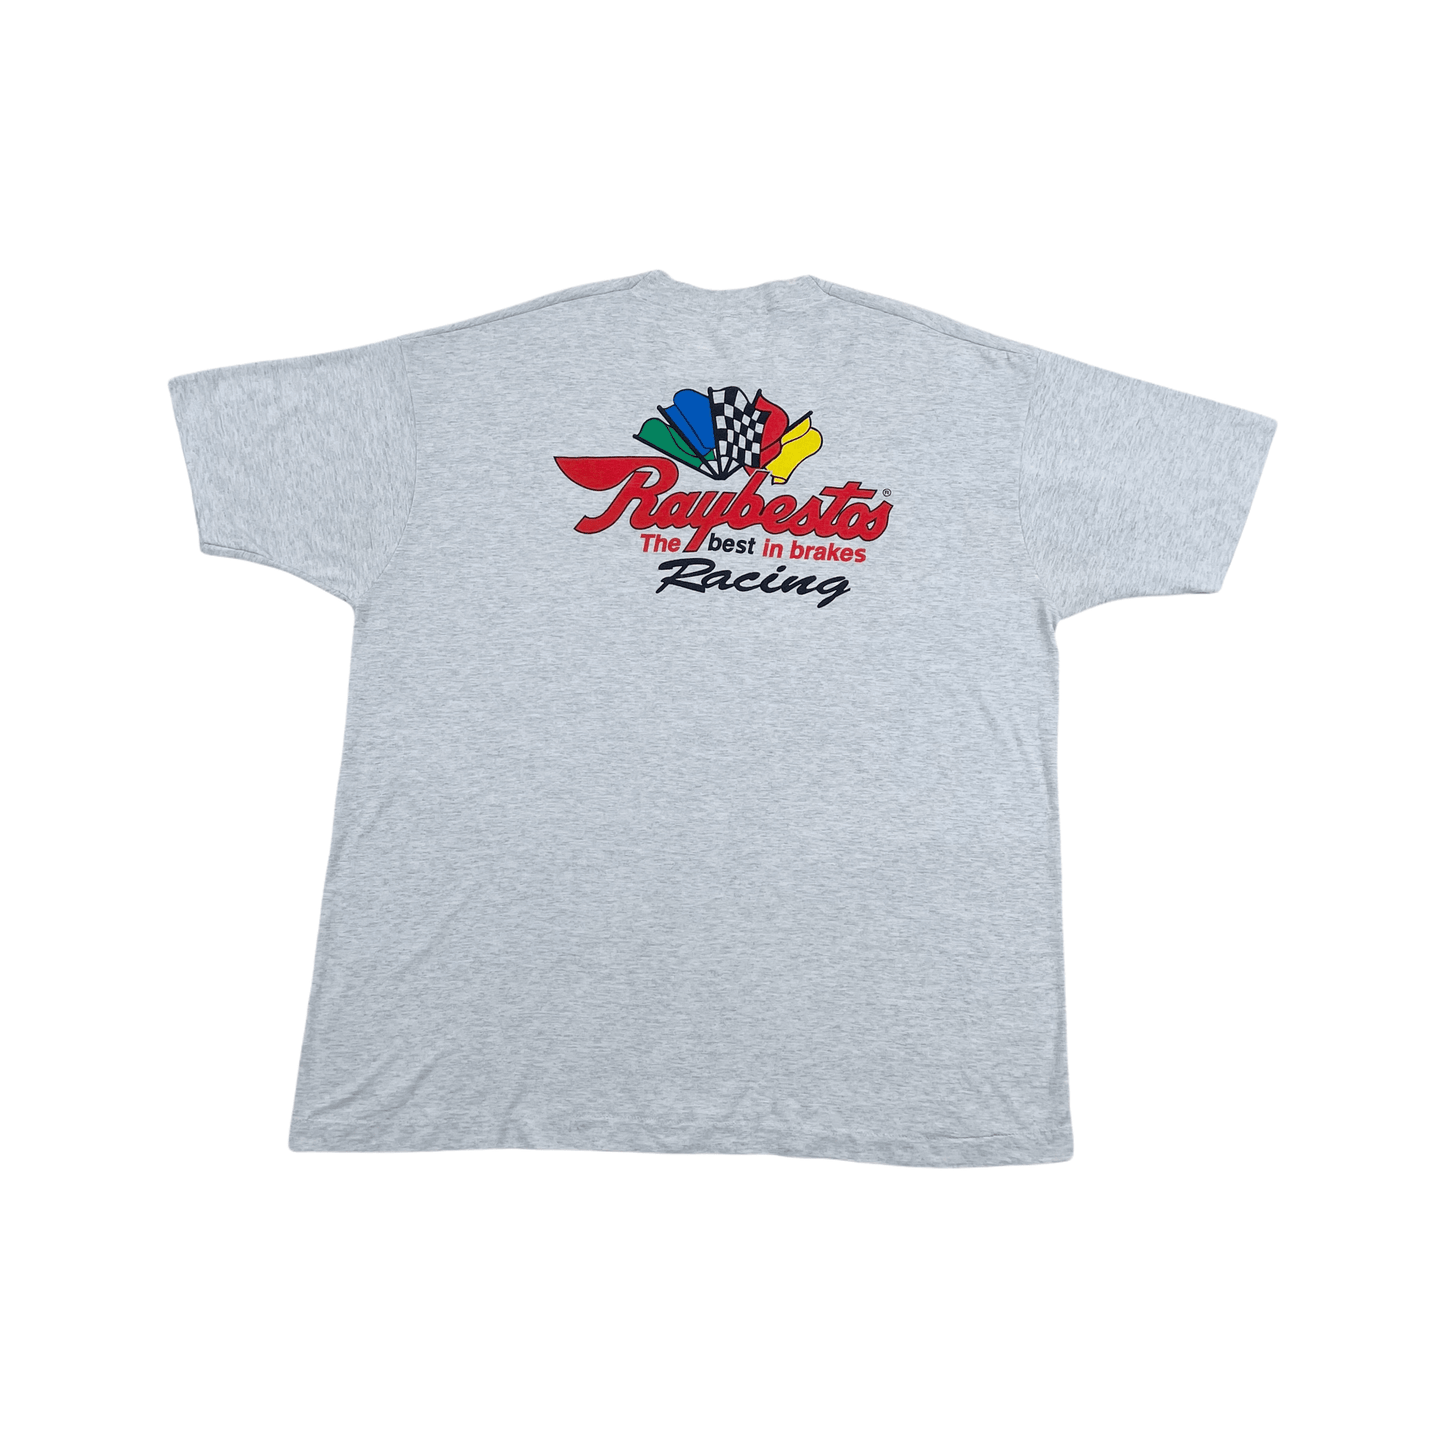 Vintage NASCAR T-shirt - Known Source